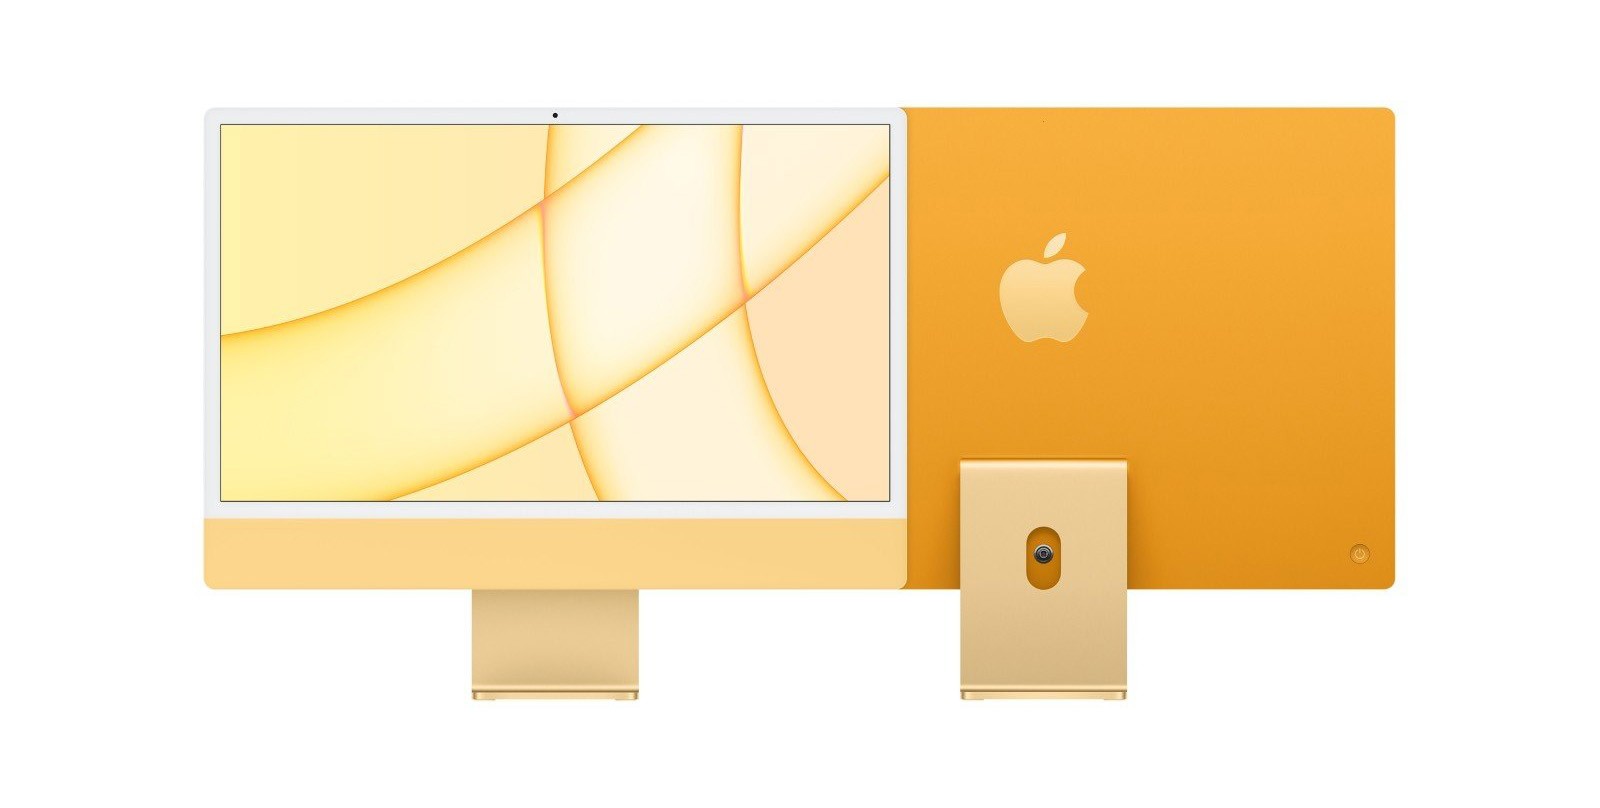 1650830306_Apple-ya-comenzo-a-trabajar-en-iMac-con-un-chip.jpeg